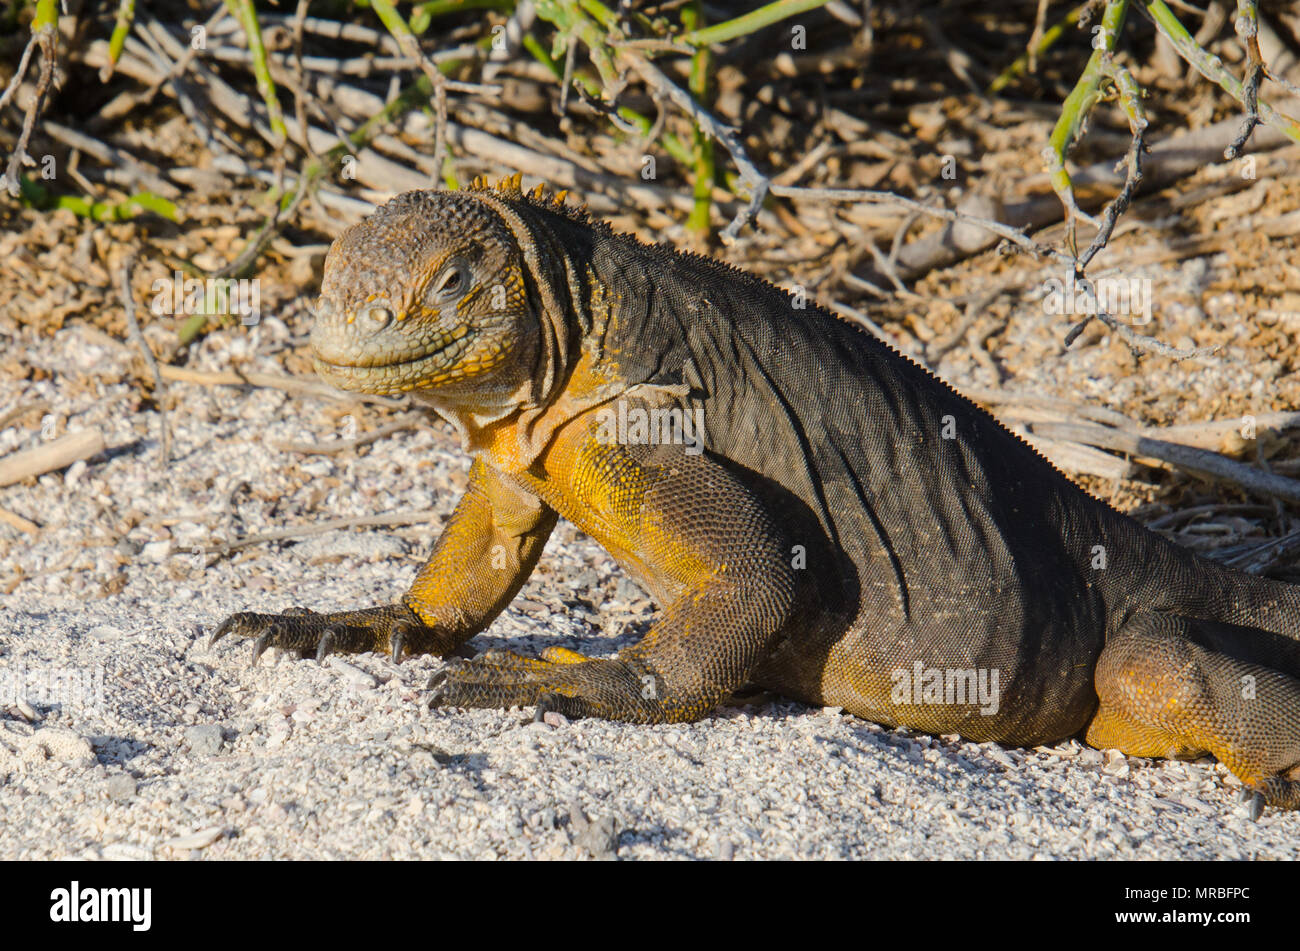 Closeup of land iguana eating in thorny tree branch. Galapagos Islands wildlife, North Seymour Island. Stock Photo